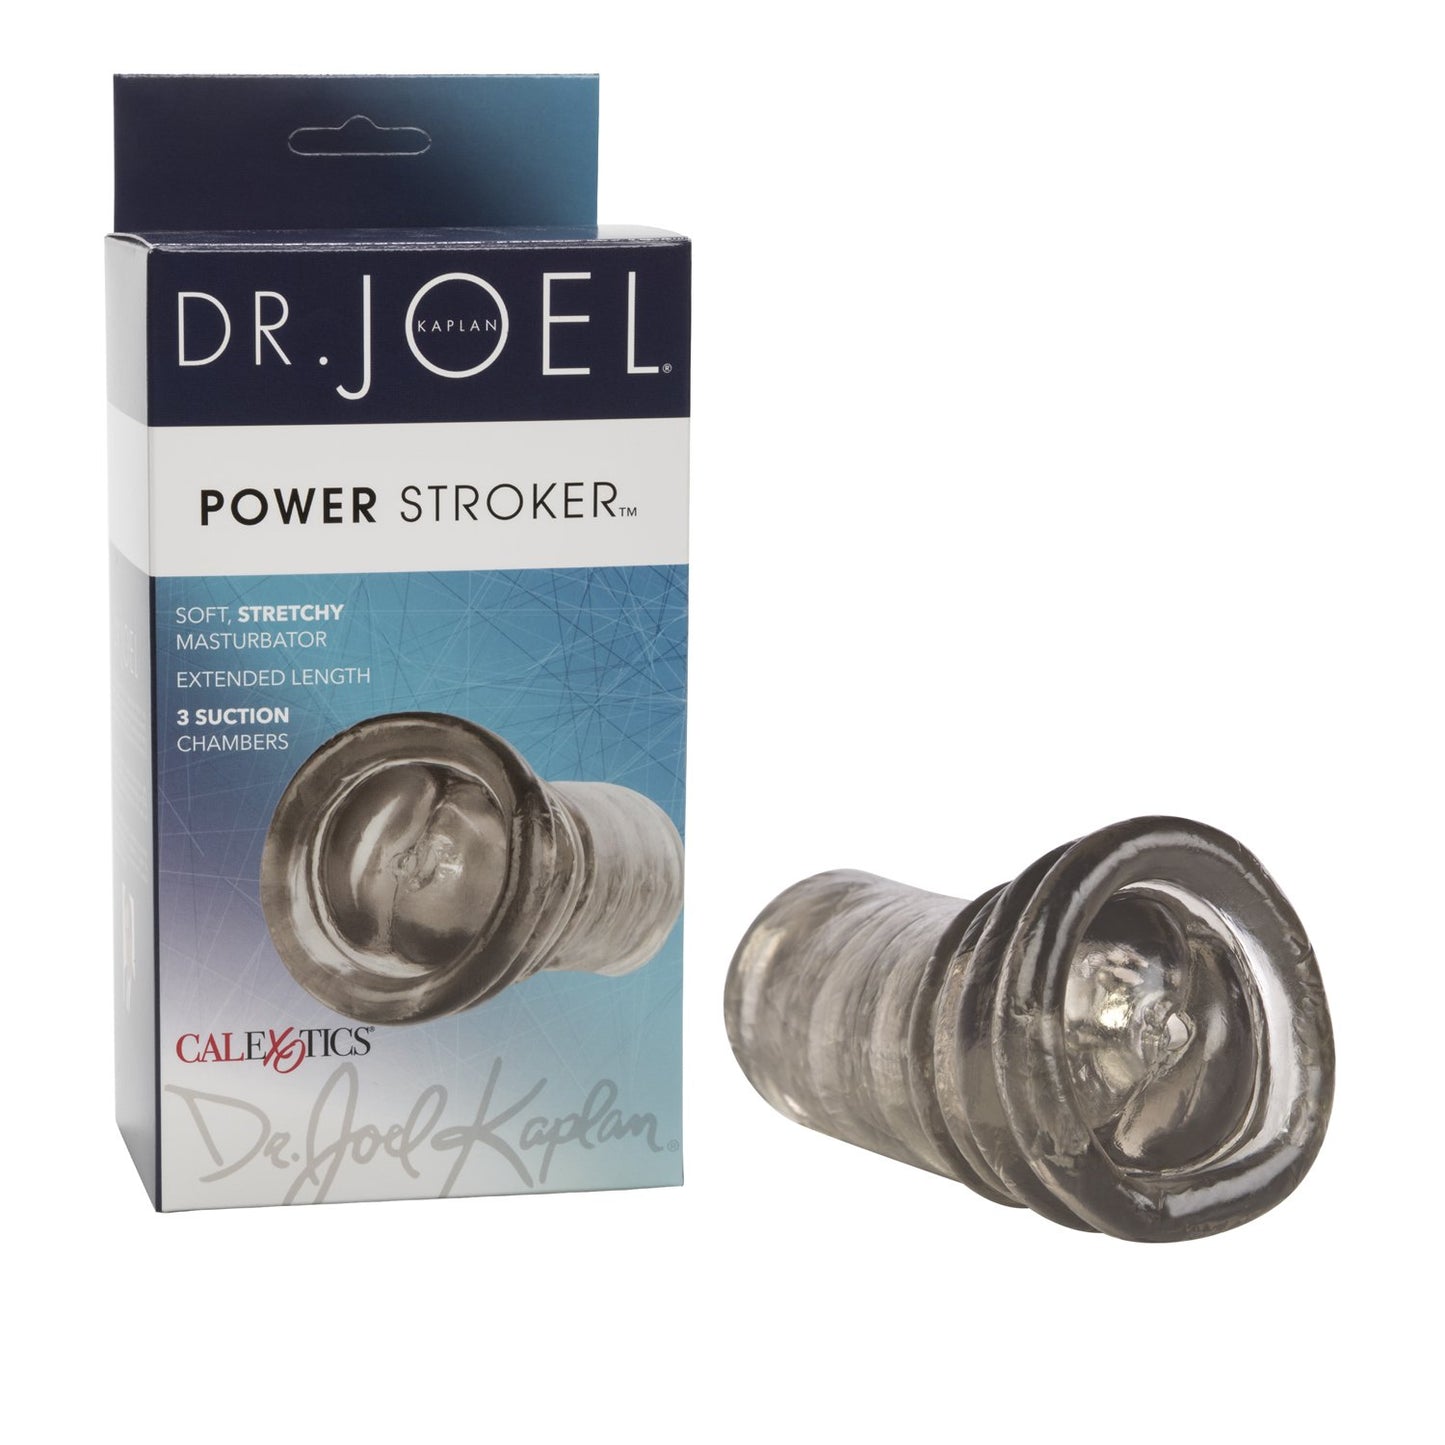 Dr. Joel Kaplan Power Stroker